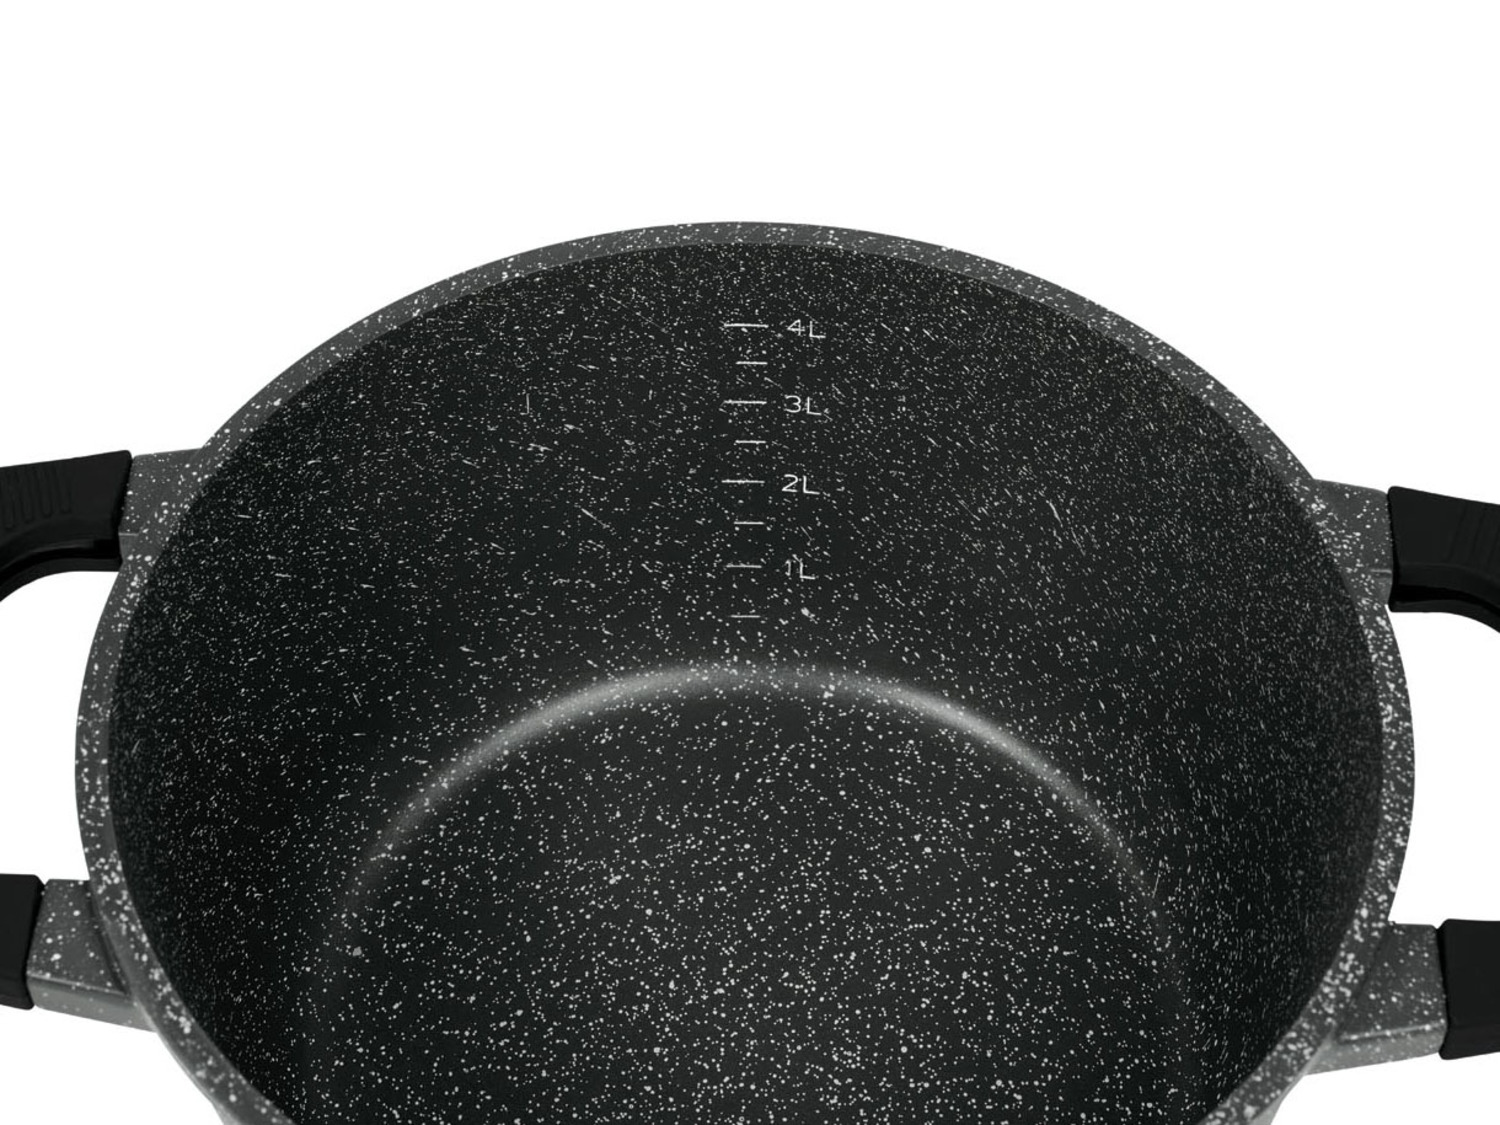 ERNESTO® Aluguss-Kochtopf, Ø 24 cm, mit Glasdeckel